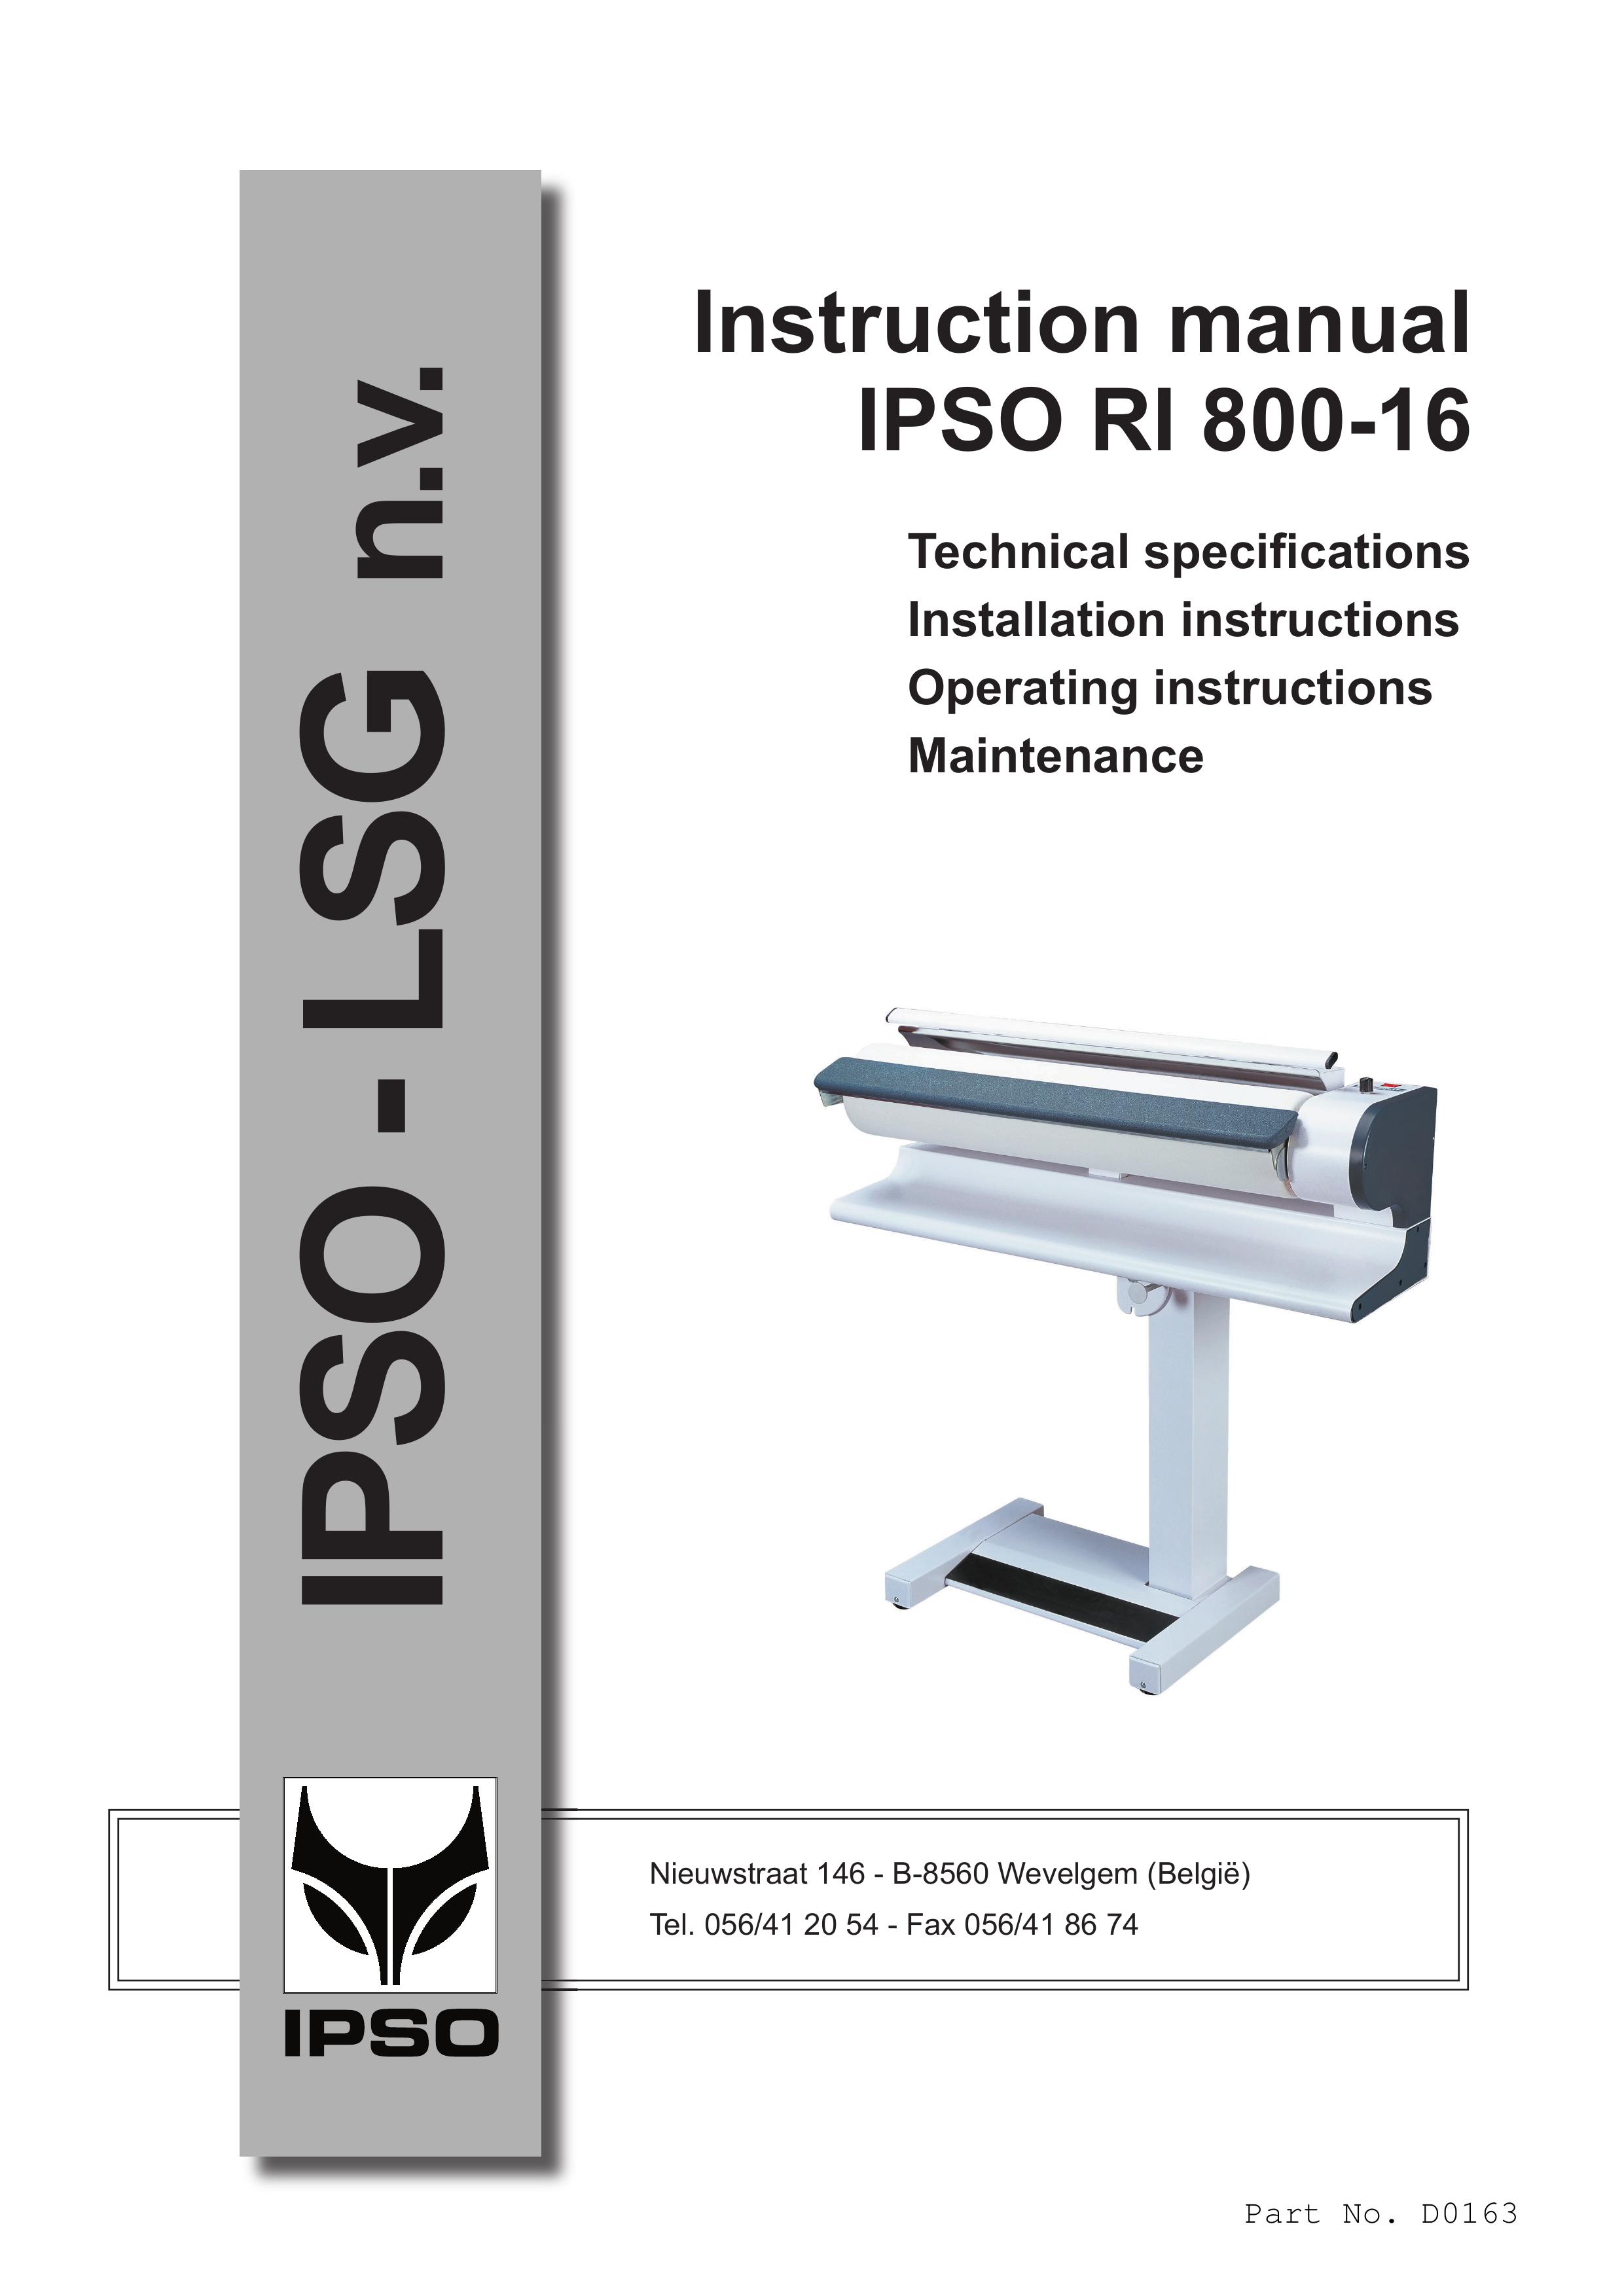 Cissell IPSO RI 800-16 Iron User Manual